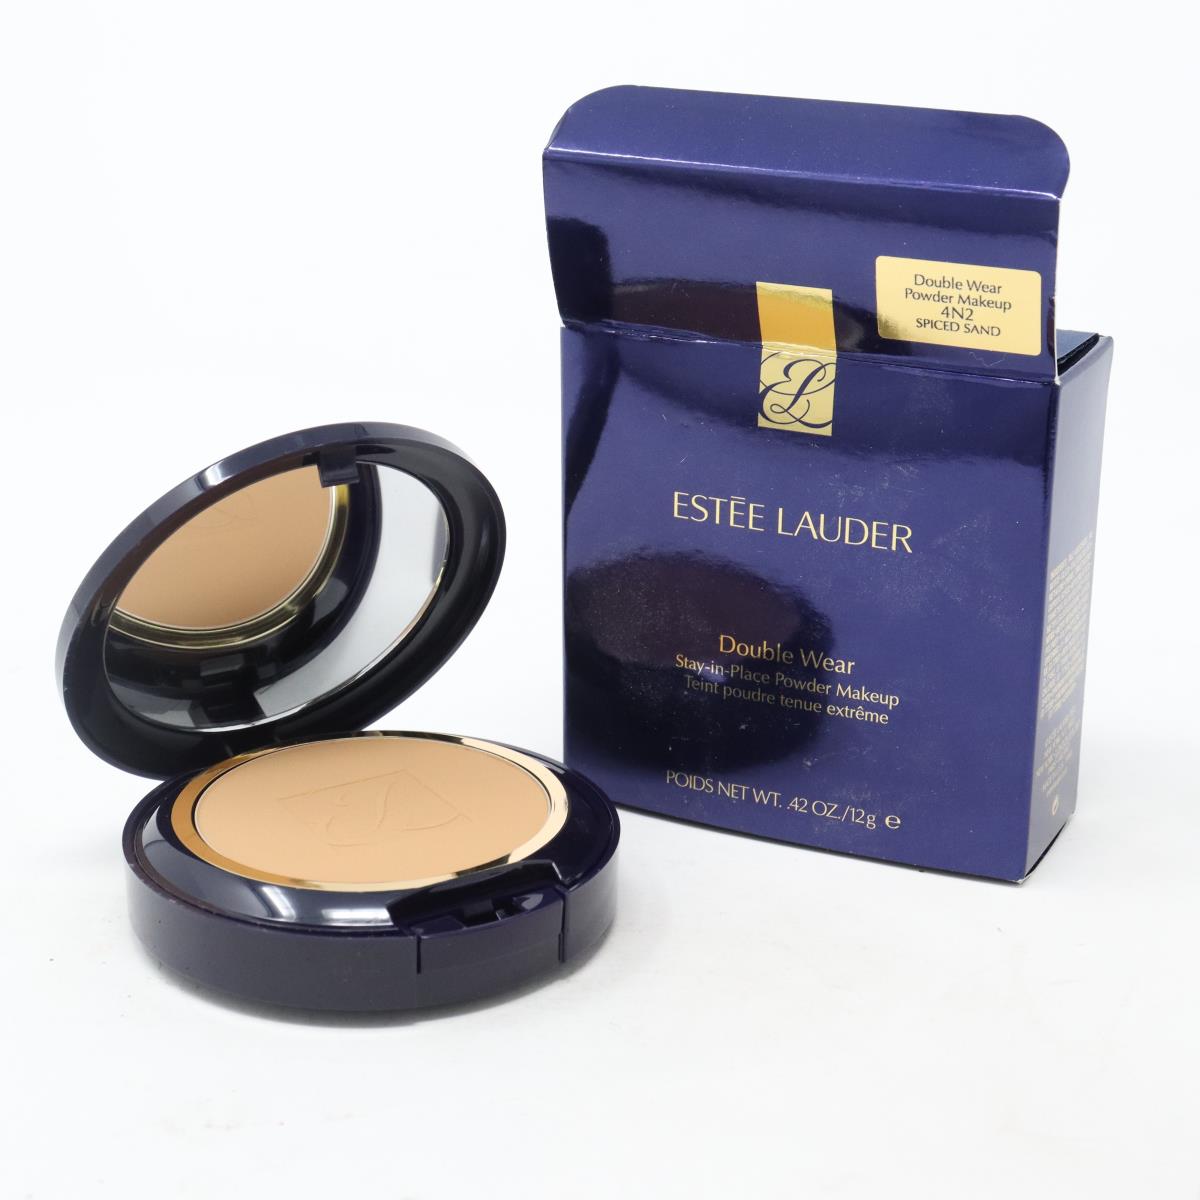 Estee Lauder Double Wear Powder Makeup 0.42oz/12g 4N2 Spiced Sand